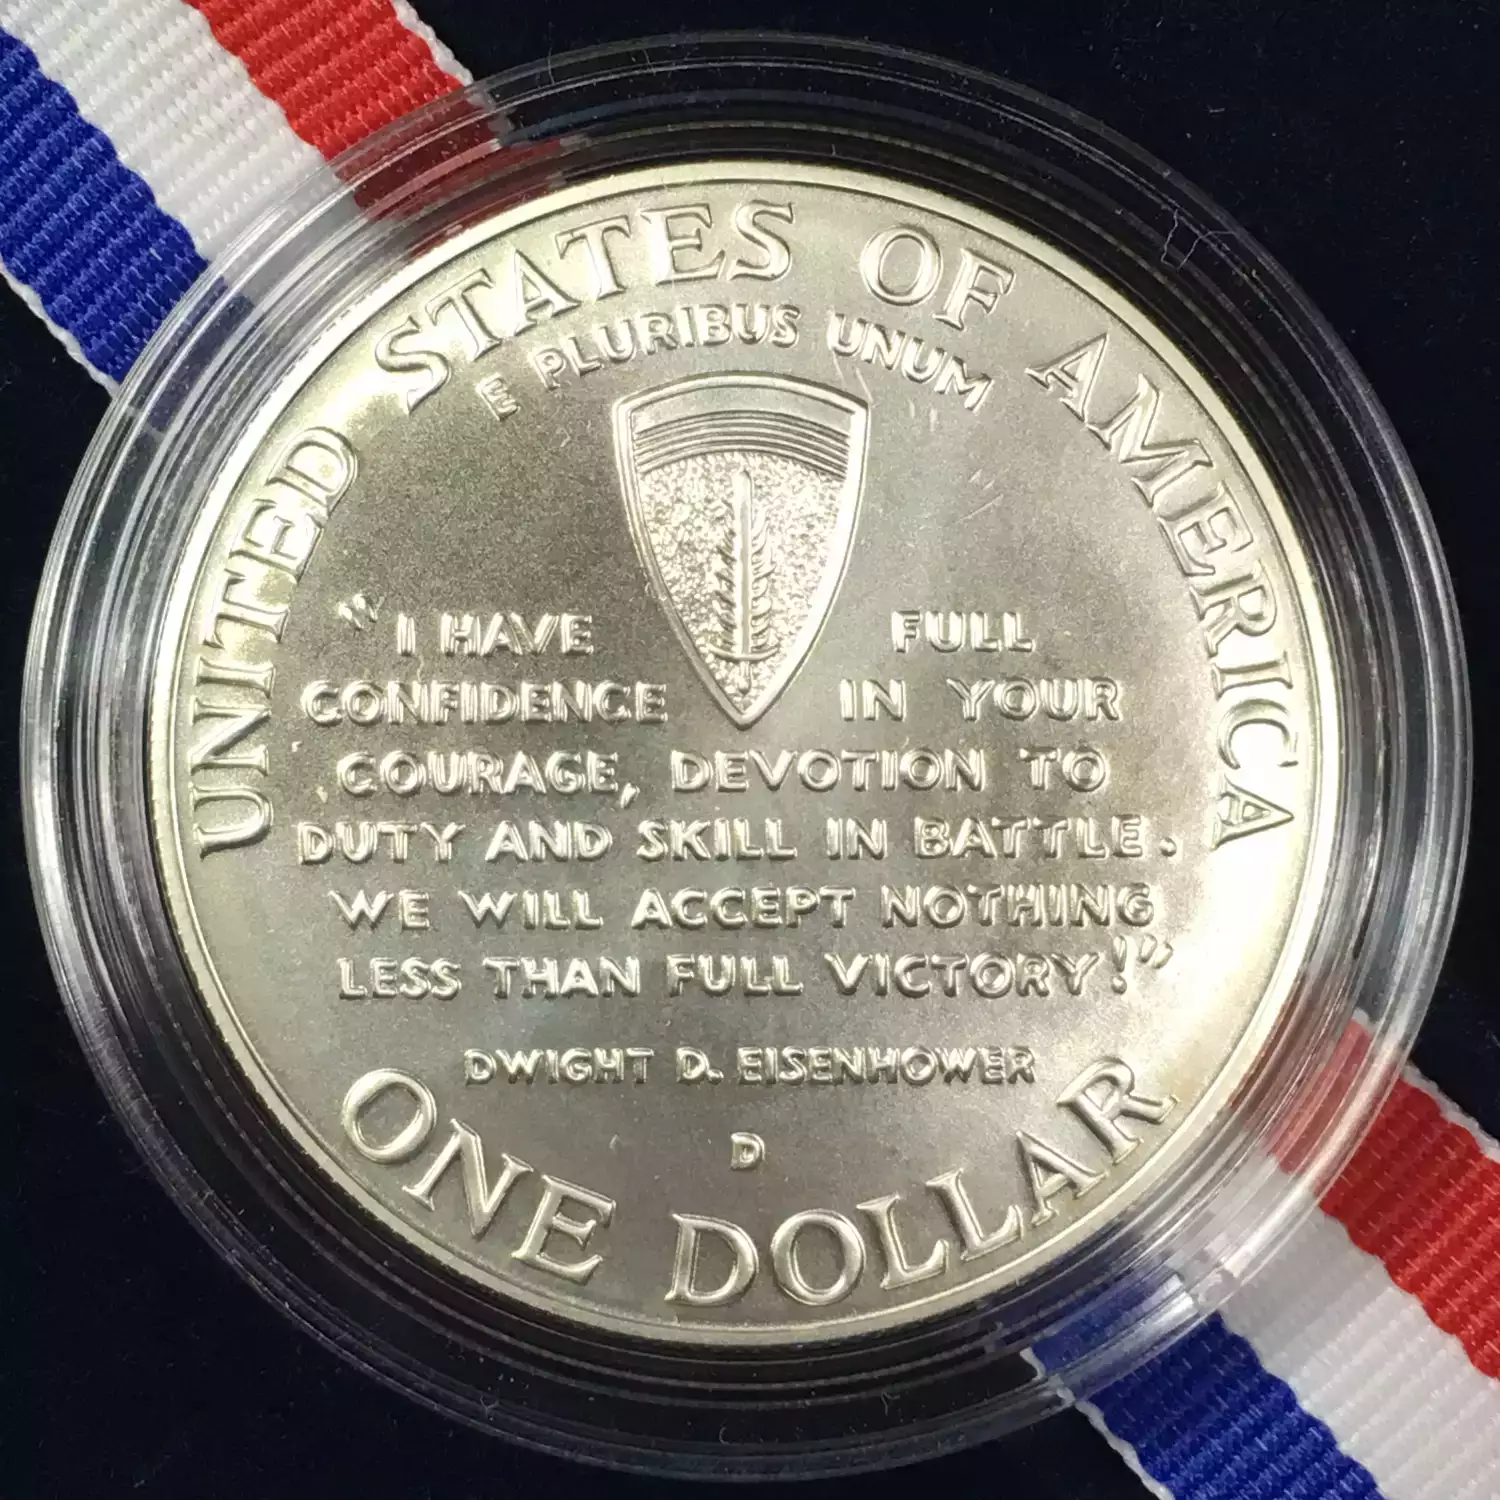 1991-1995-D World War II 50th Anniversary Uncirculated Silver Dollar US Mint OGP